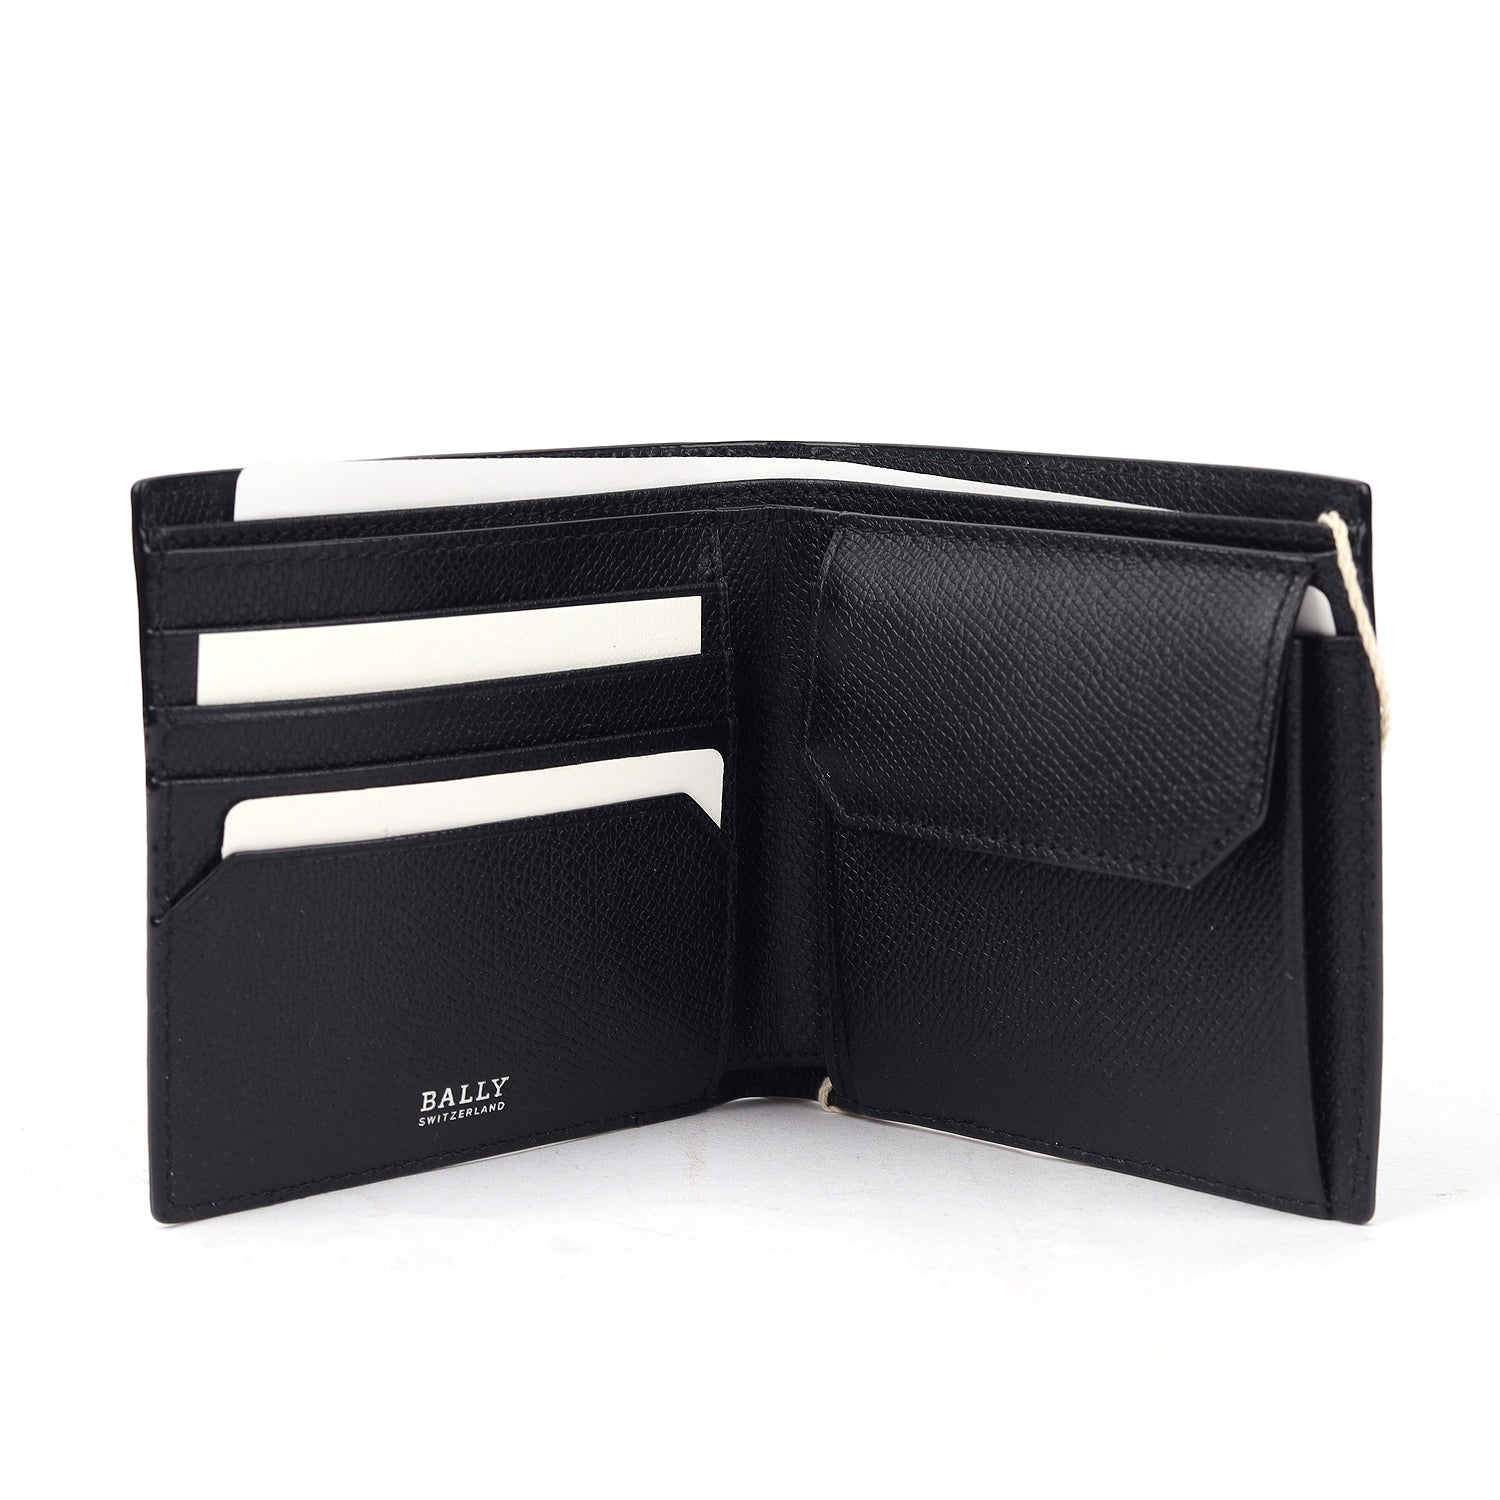 Trasai.lt Bi-Fold Leather Wallet